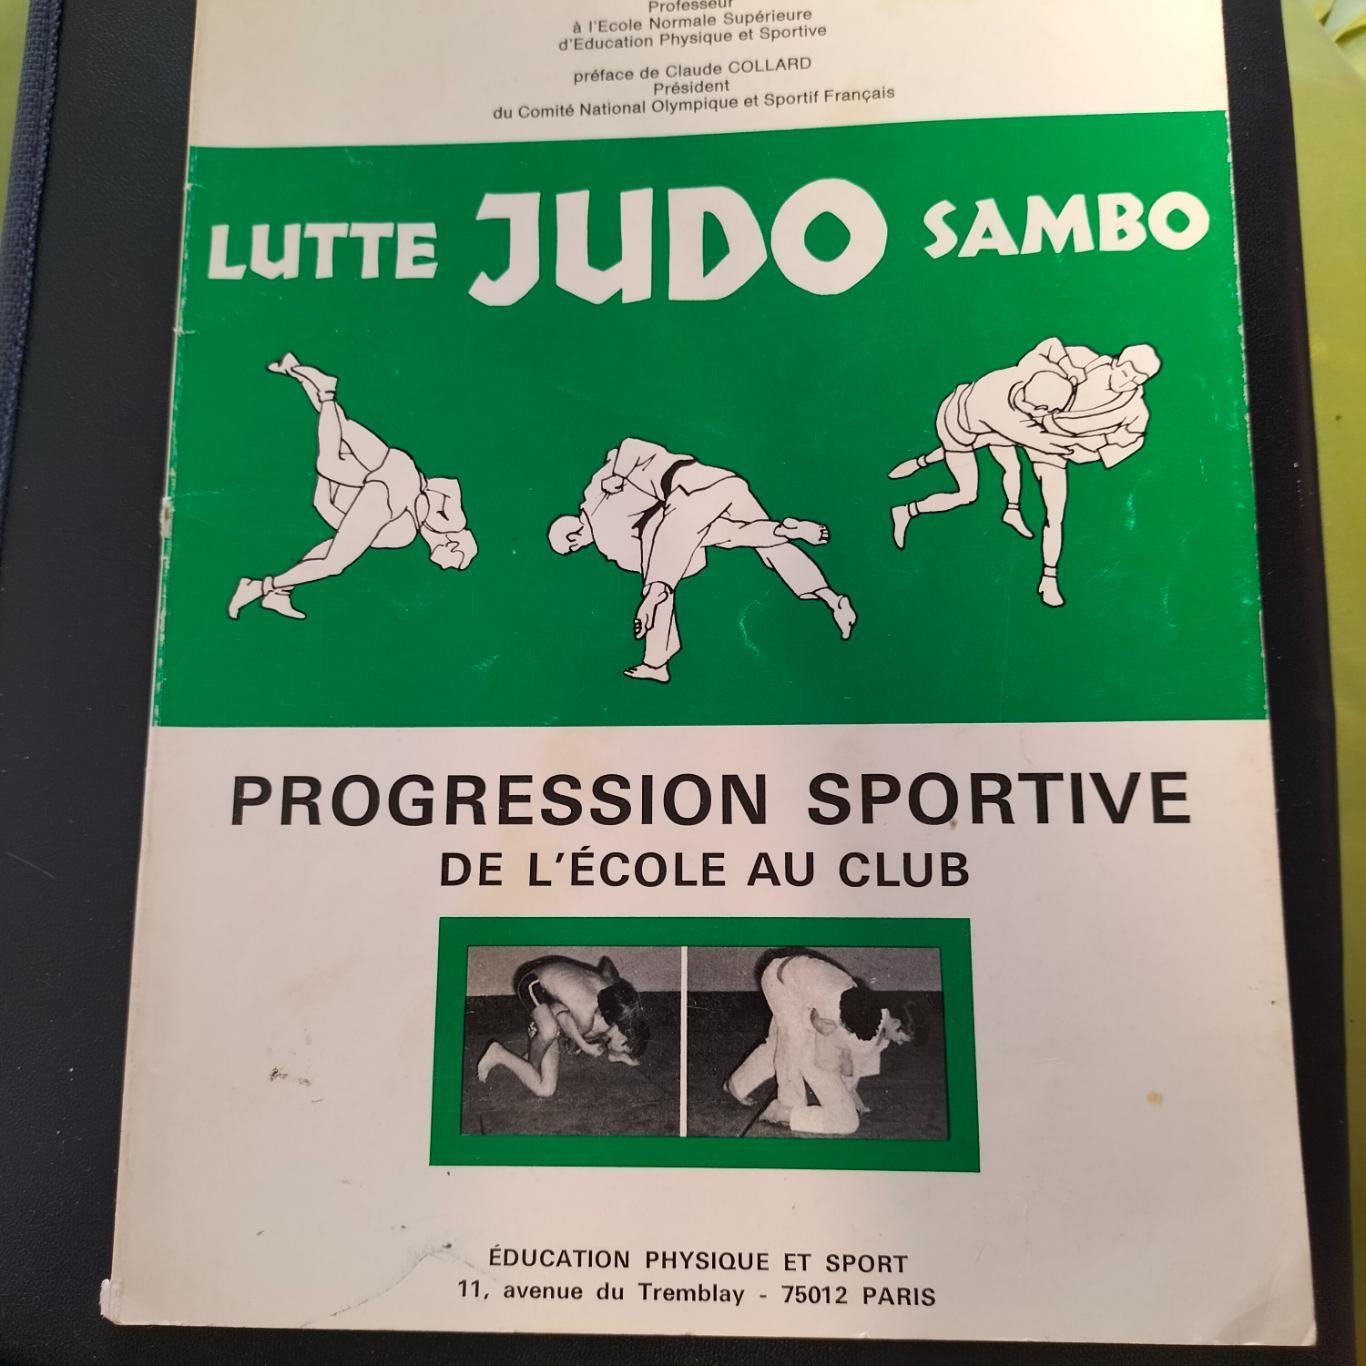 JudoSambo Lutte